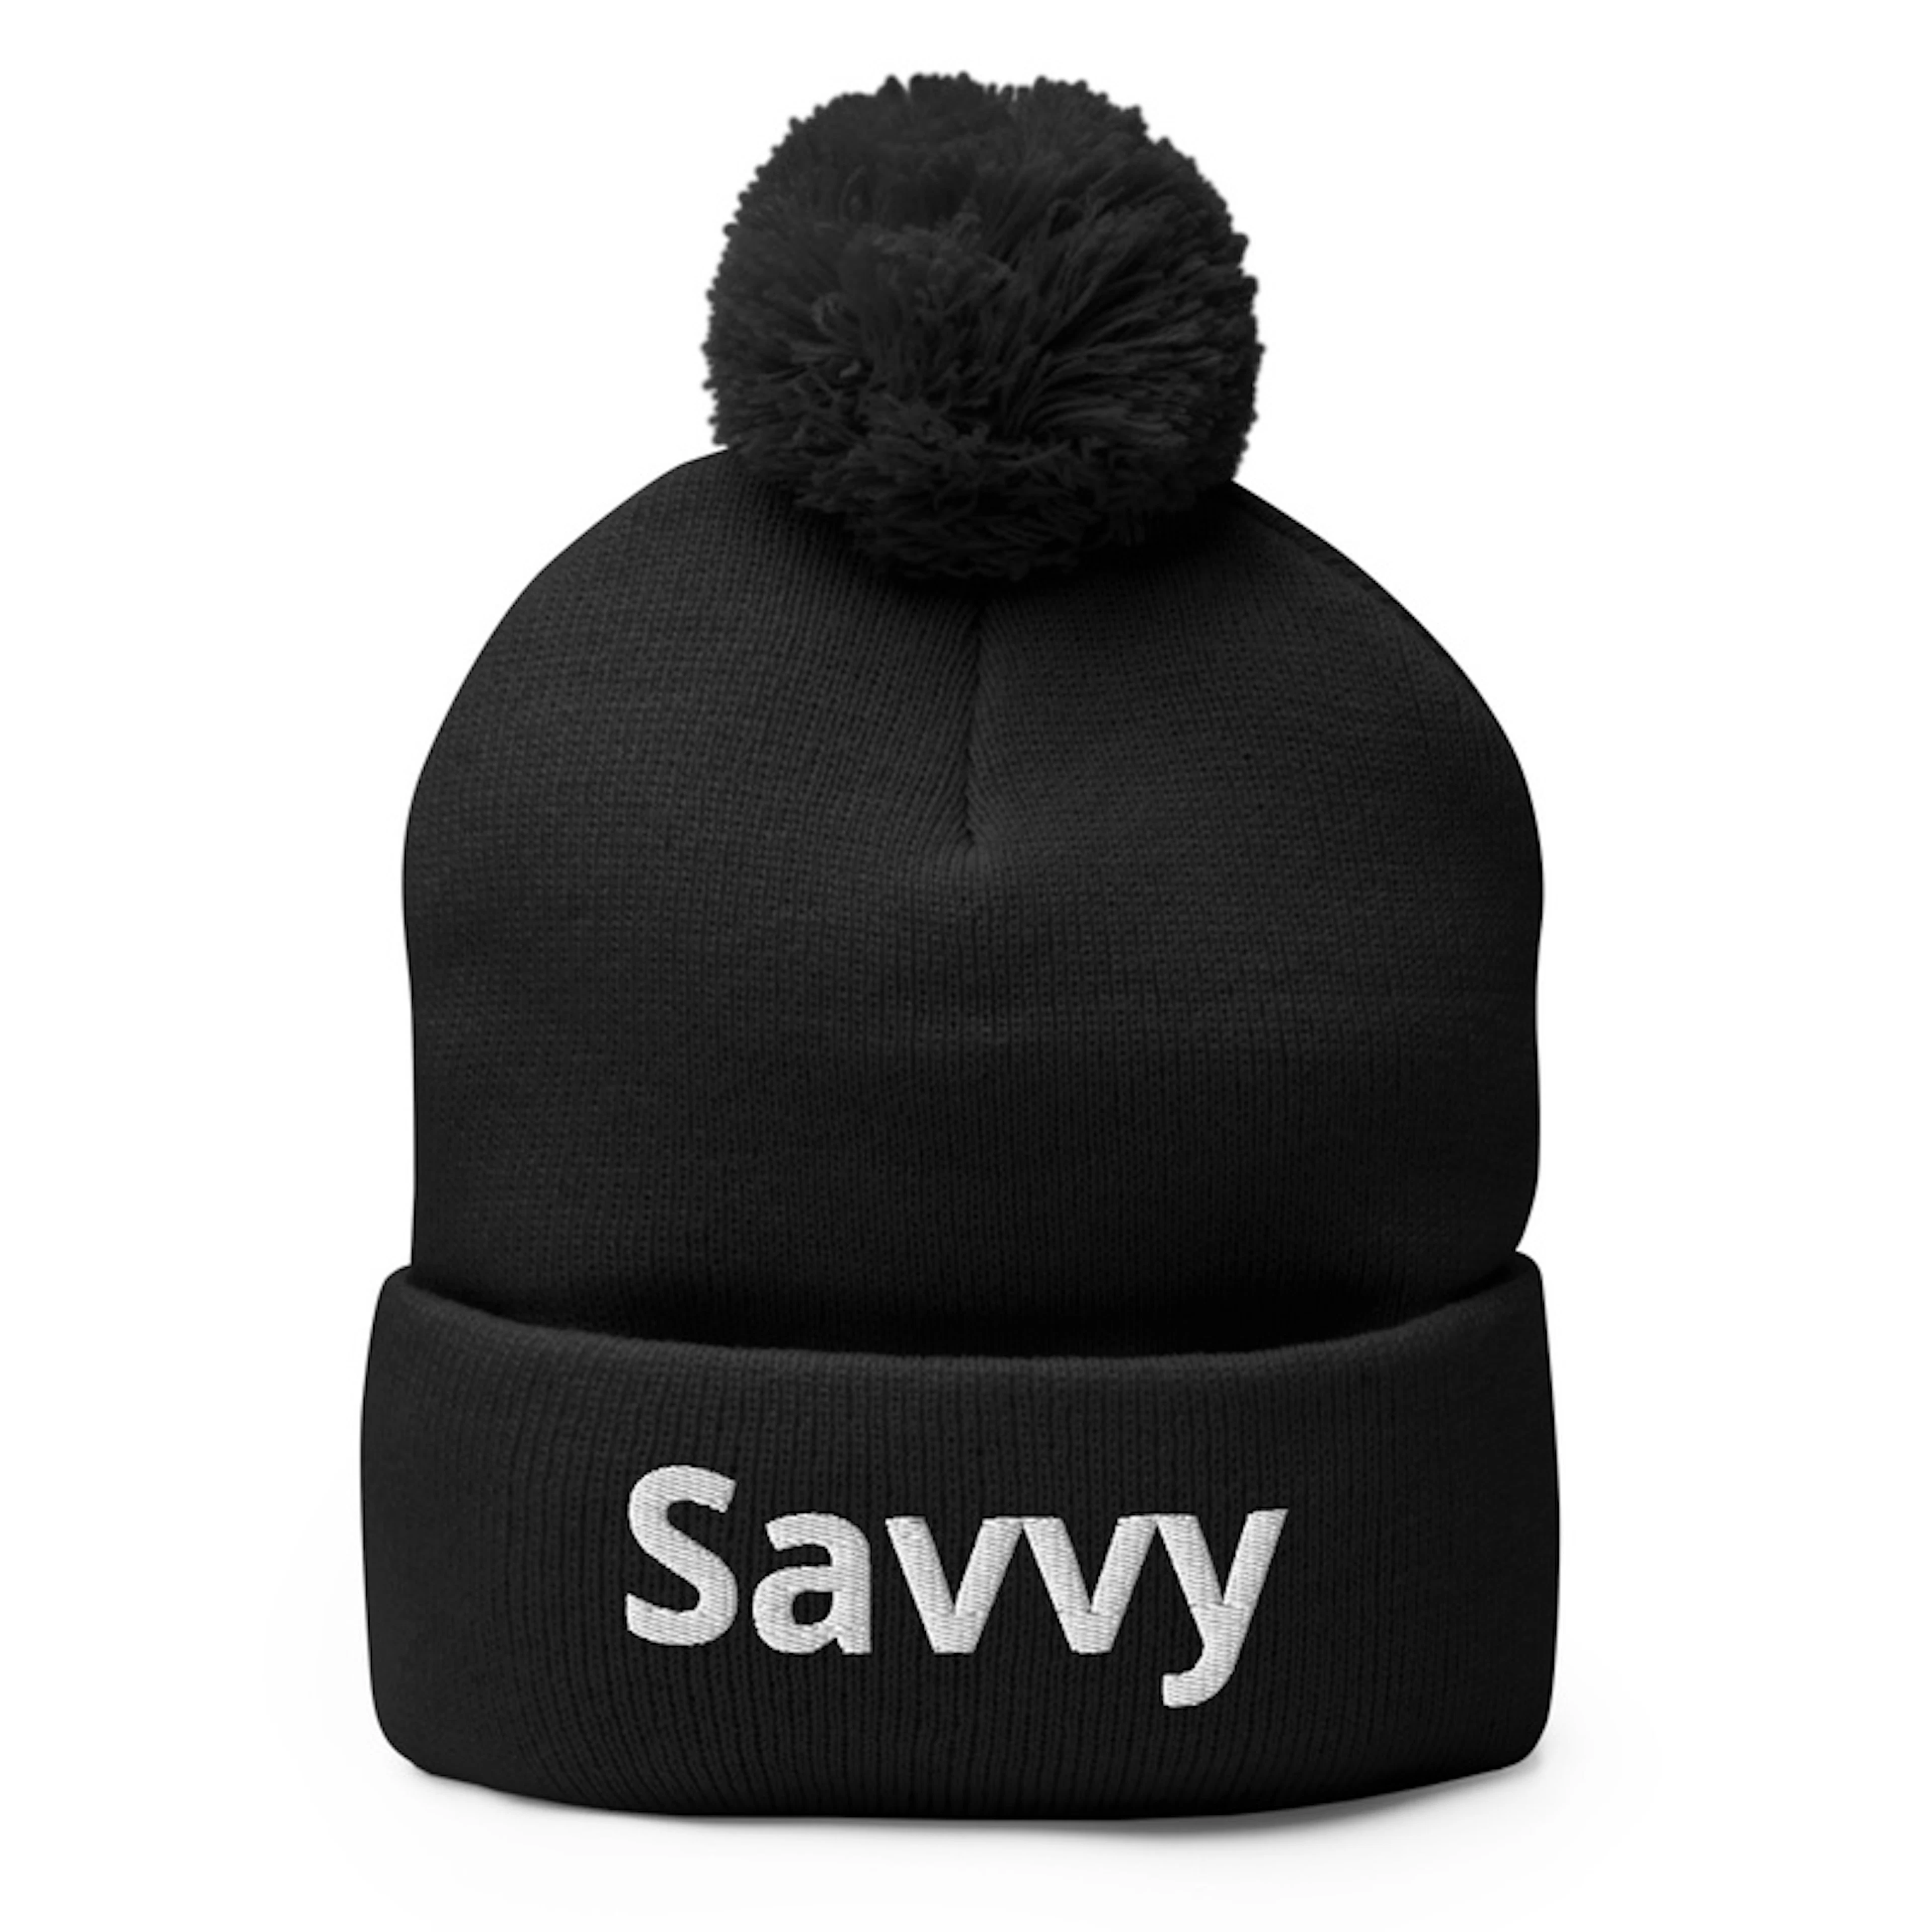 Savvy Pom Pom Hat